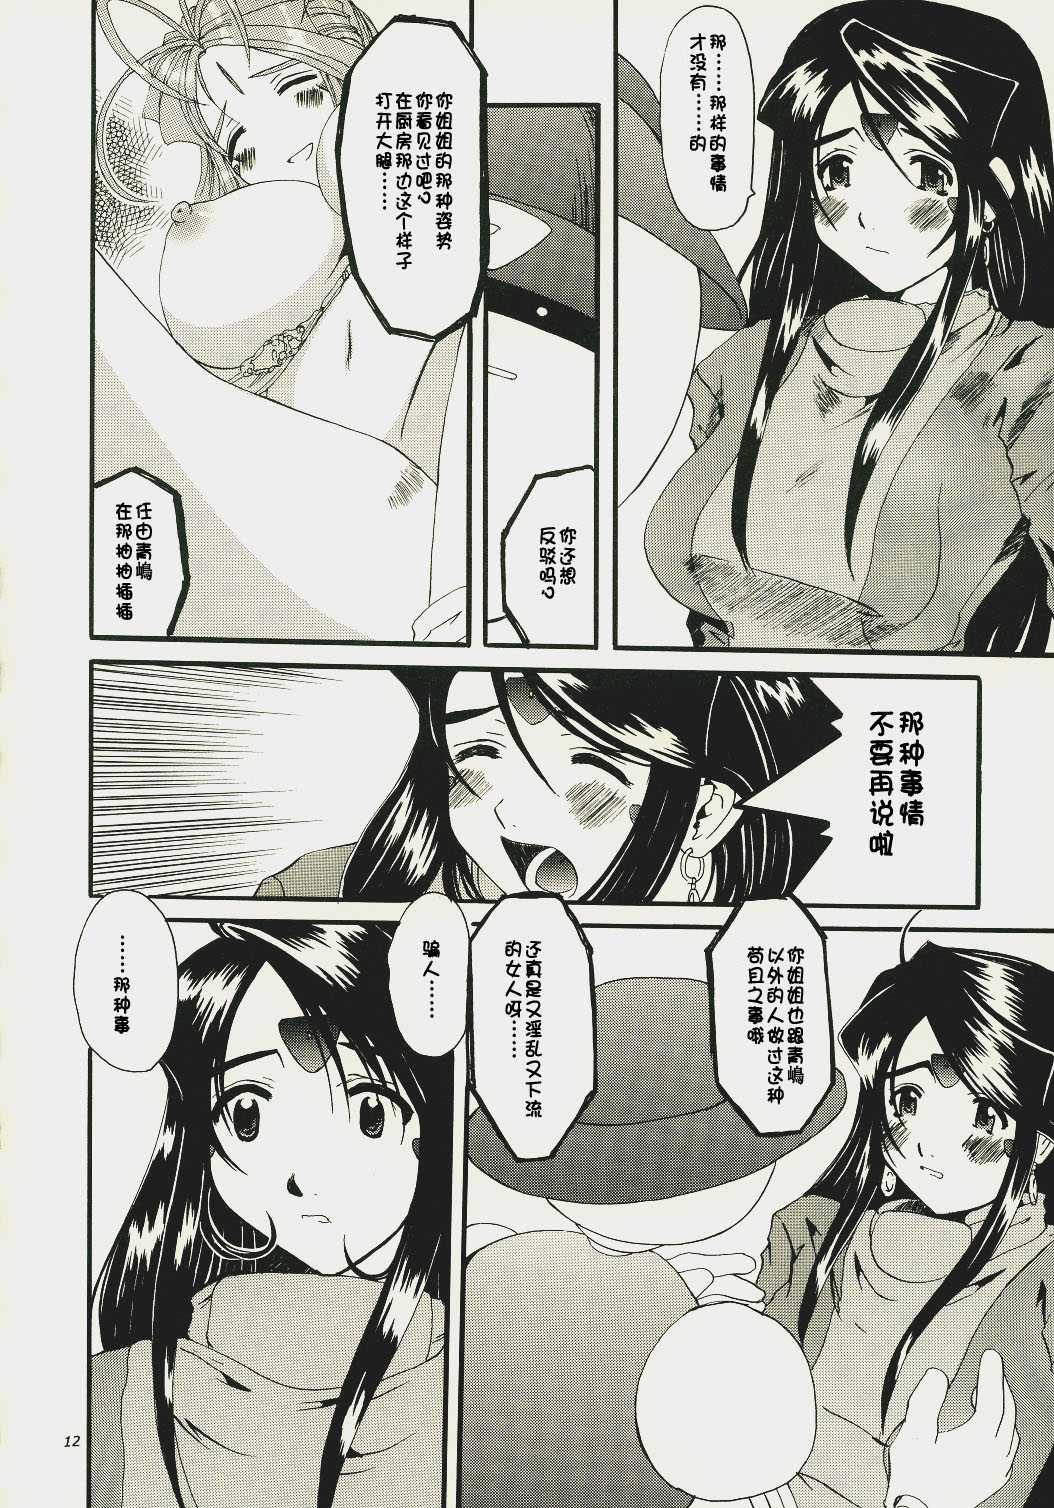 [Tenzan Factory] Nightmare of My Goddess vol.7 (Ah! Megami-sama/Ah! My Goddess)（chinese） [天山工房] Nightmare of My Goddess vol.7 (ああっ女神さまっ)（里流浪猫汉化组）